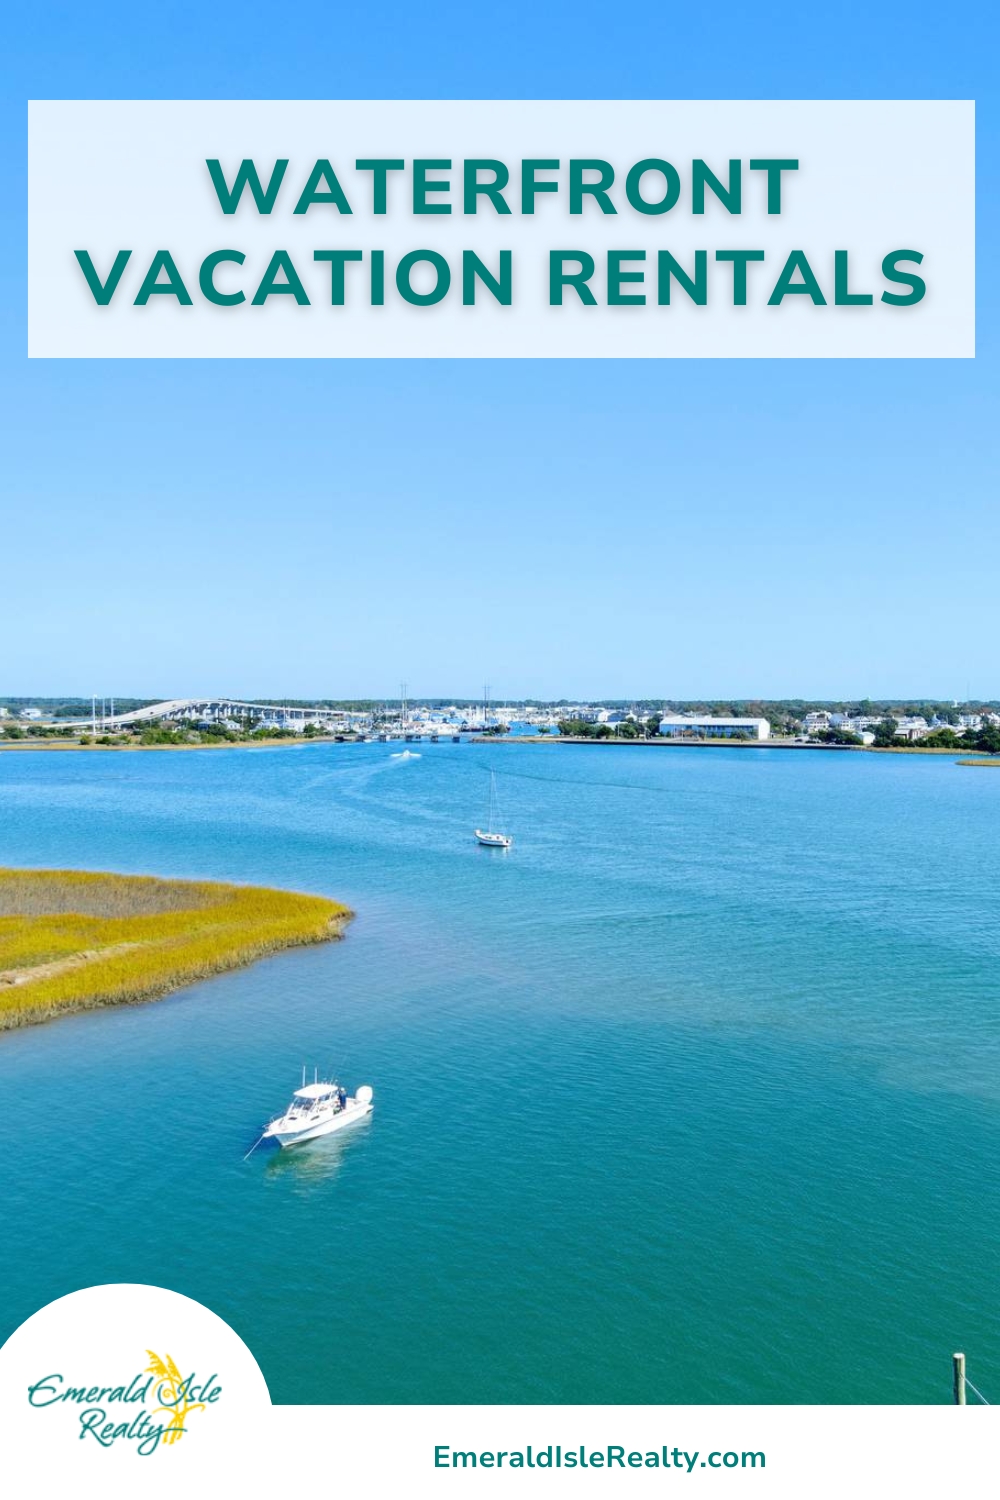 Waterfront Vacation Rentals on North Carolina's Crystal Coast